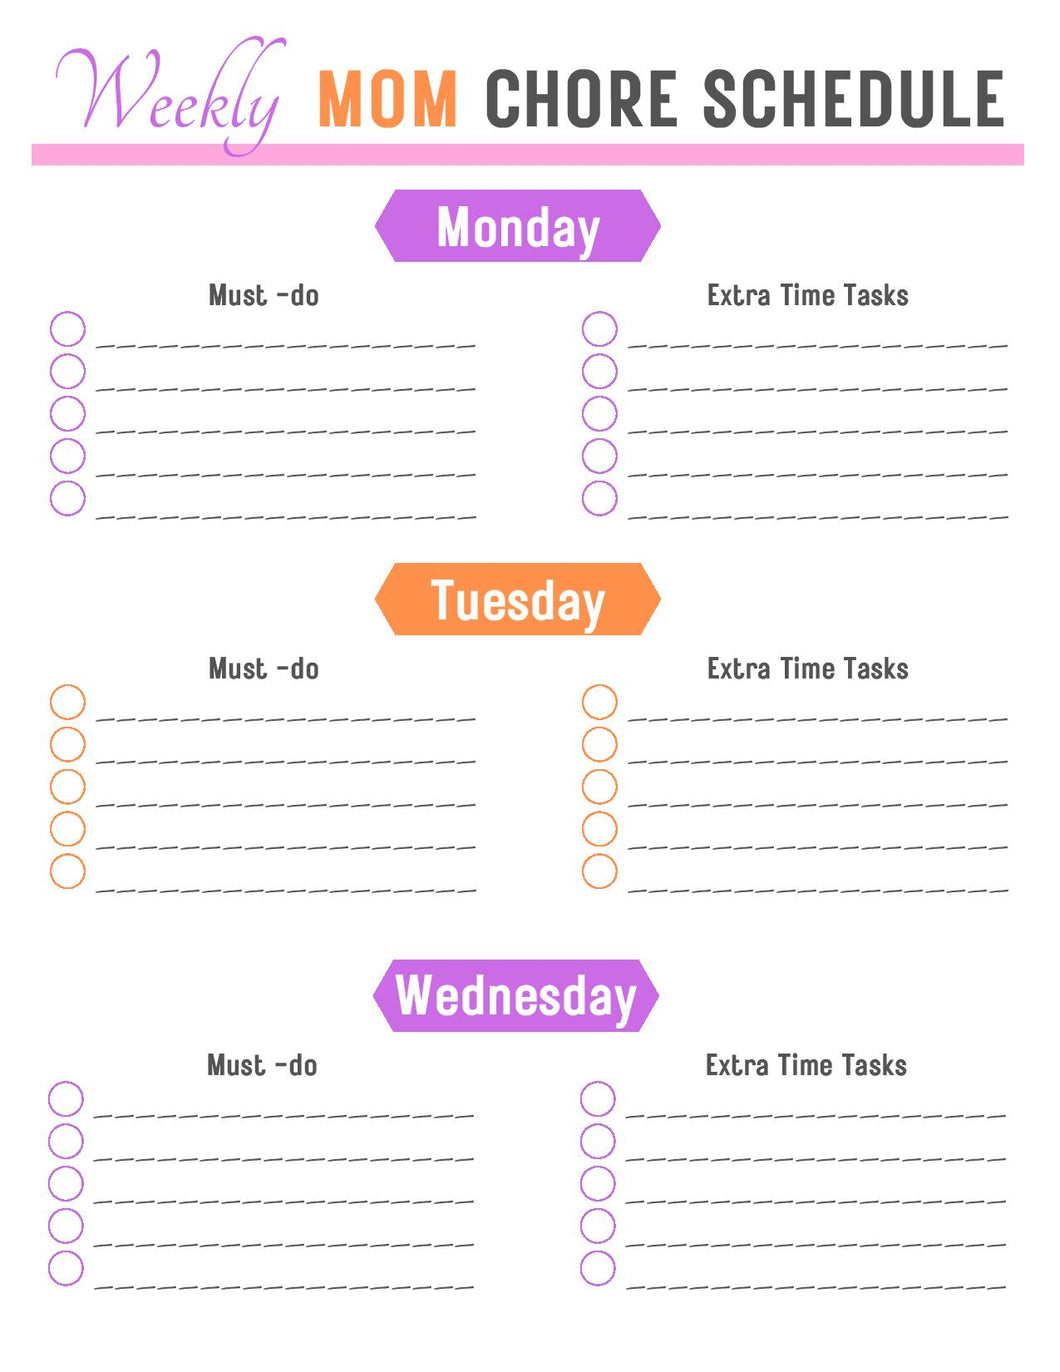 Weekly Mom Chore Schedule